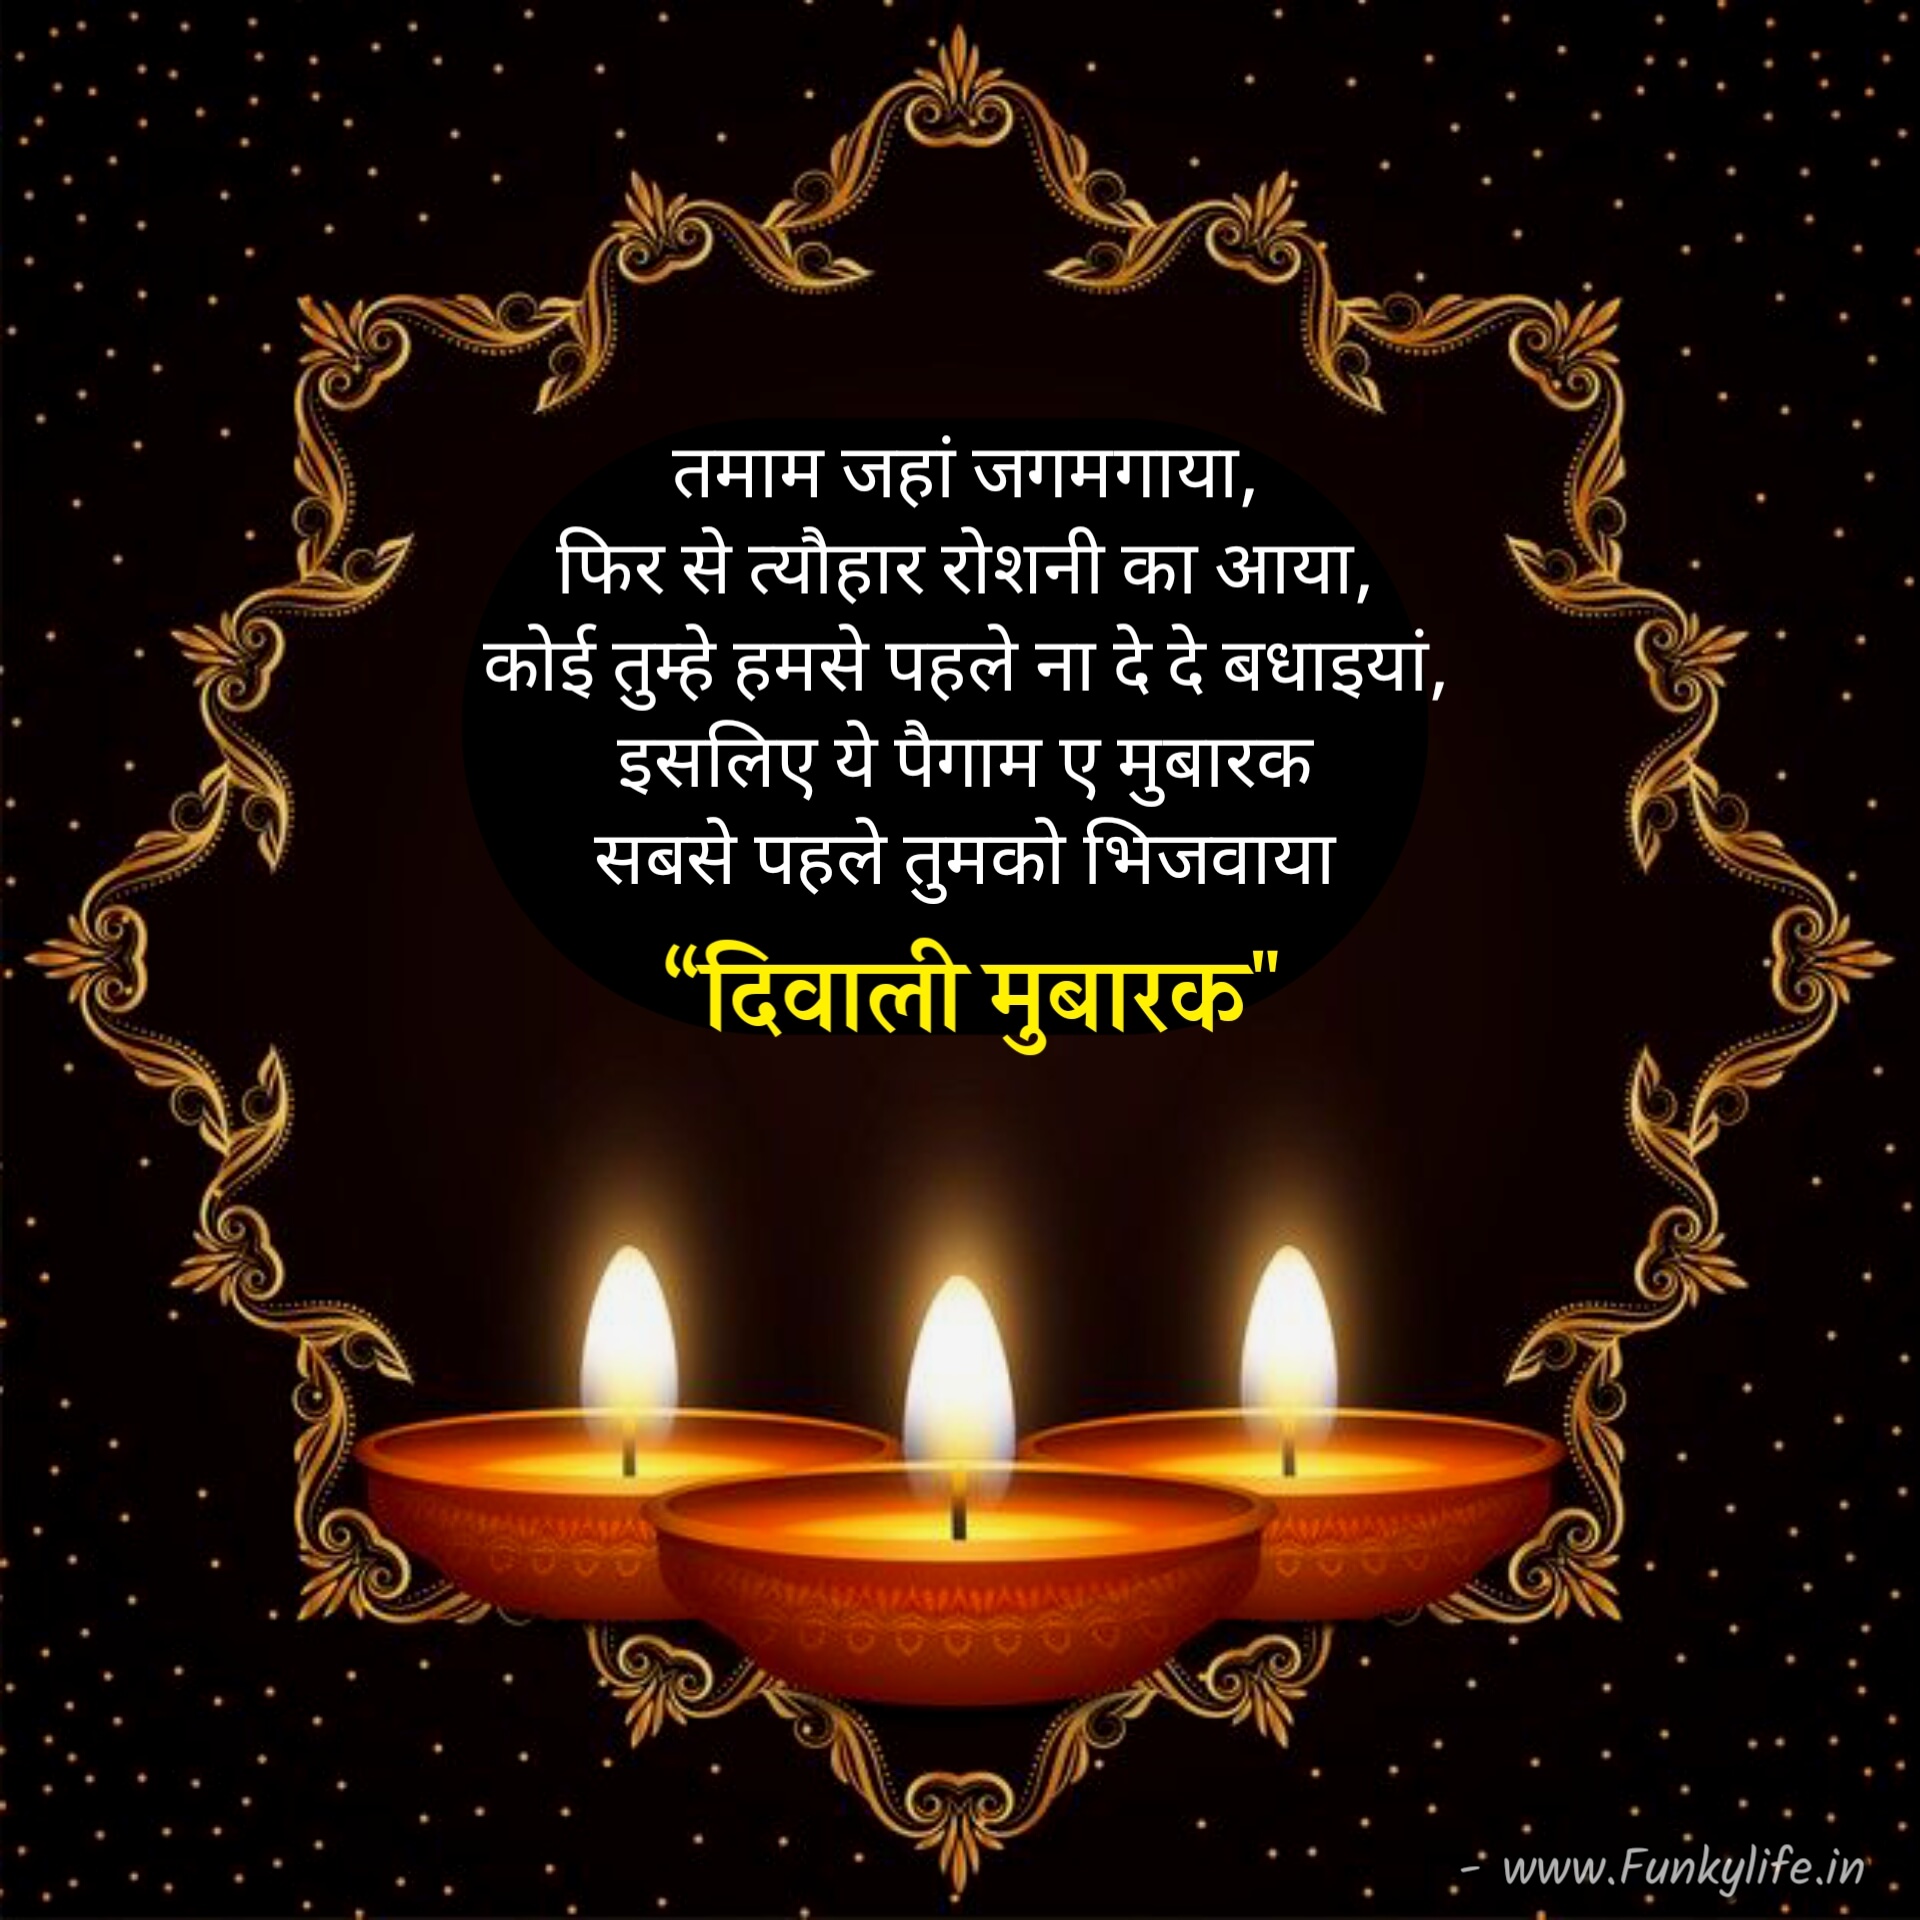 Diwali Mubarak in Hindi